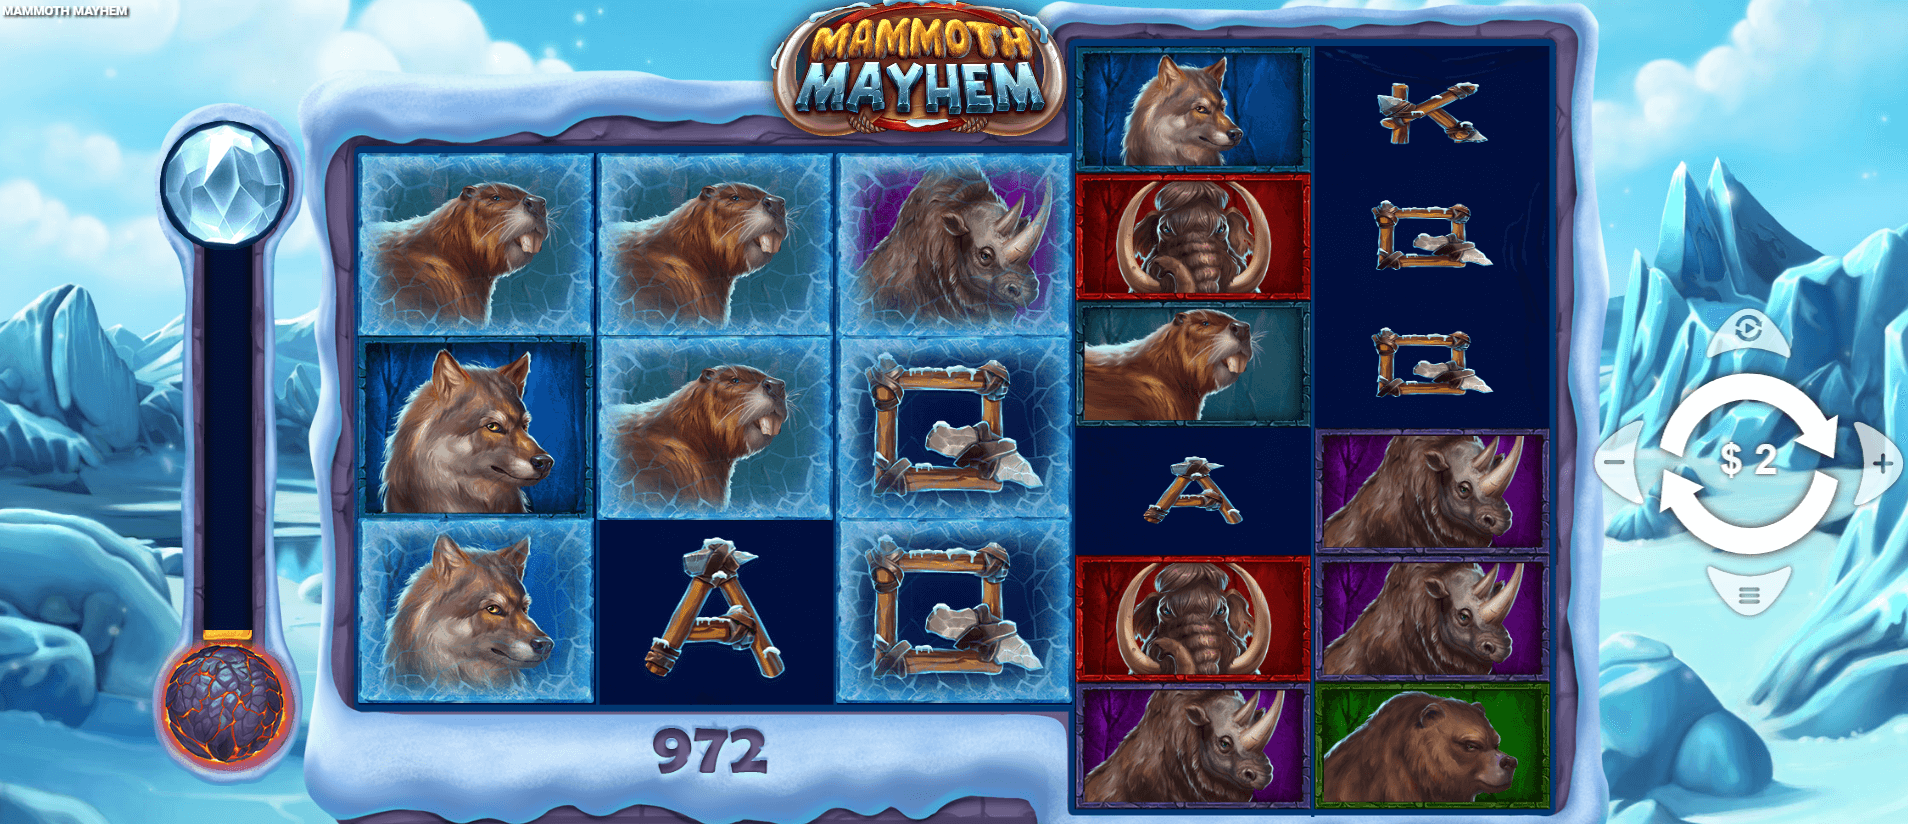 Mammoth Mayhem Slot Game